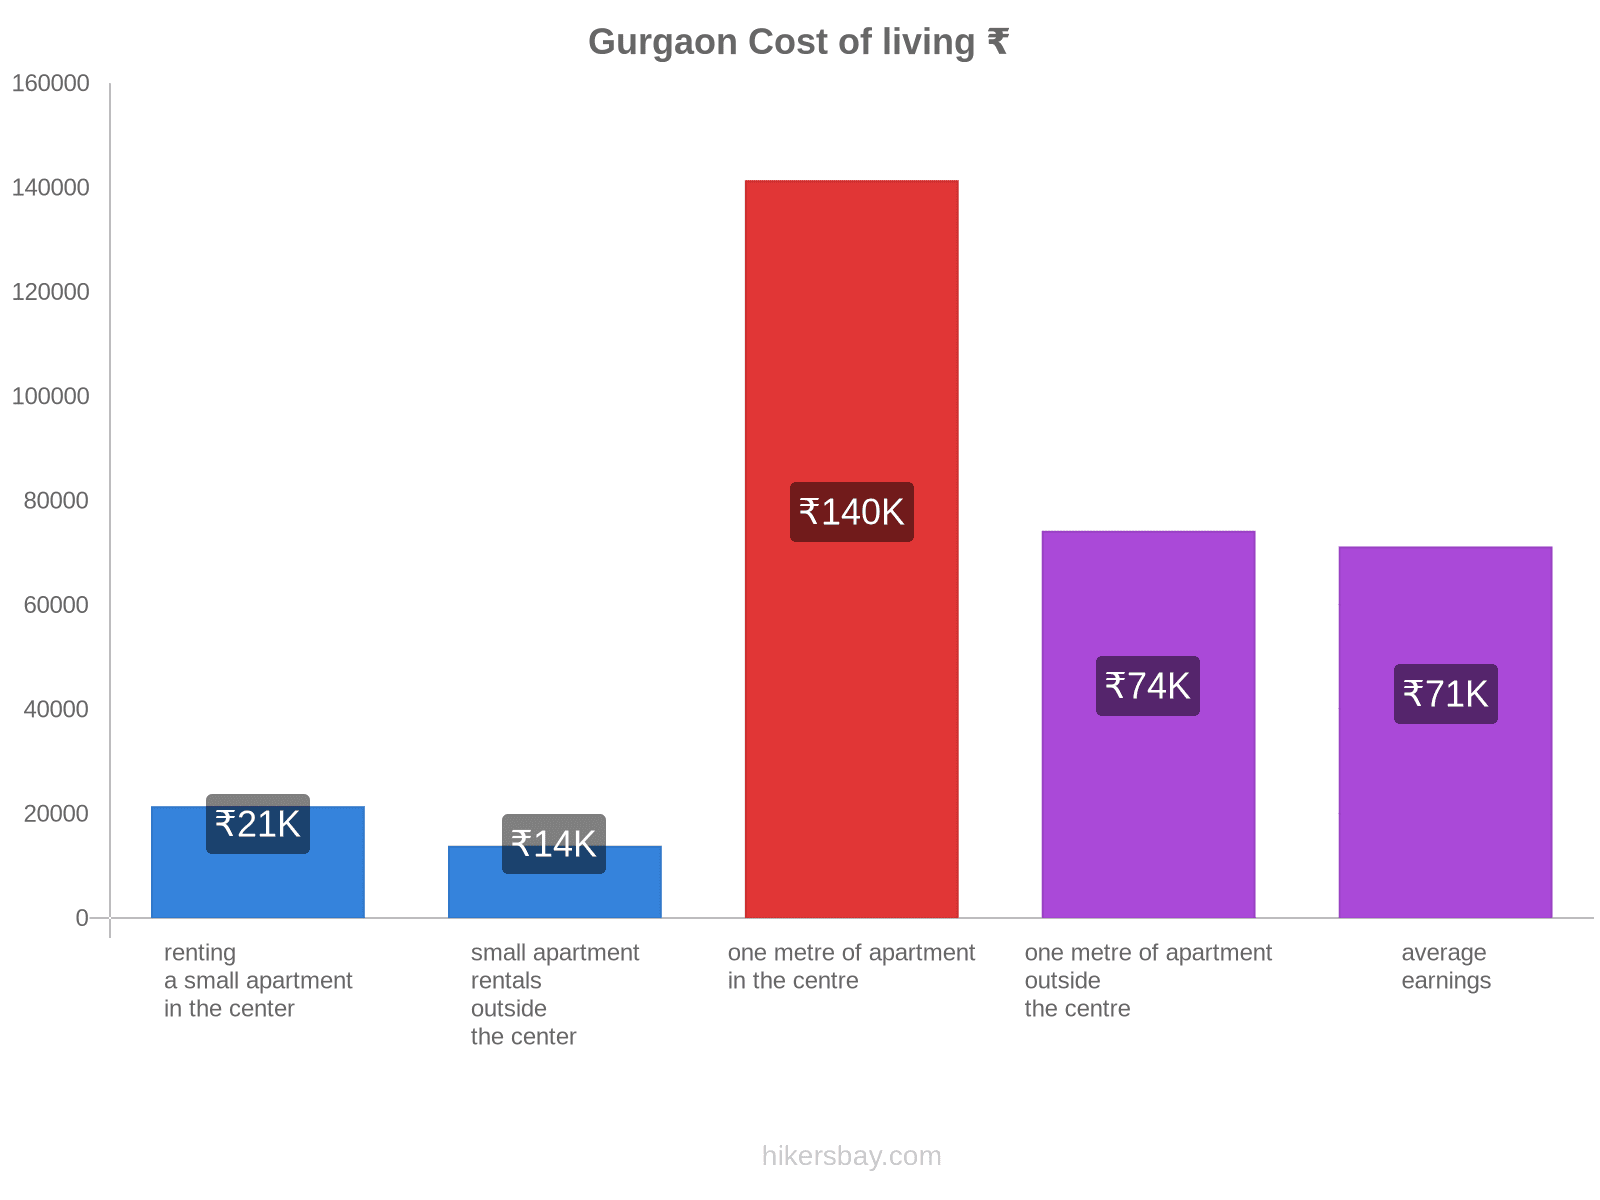 Gurgaon cost of living hikersbay.com